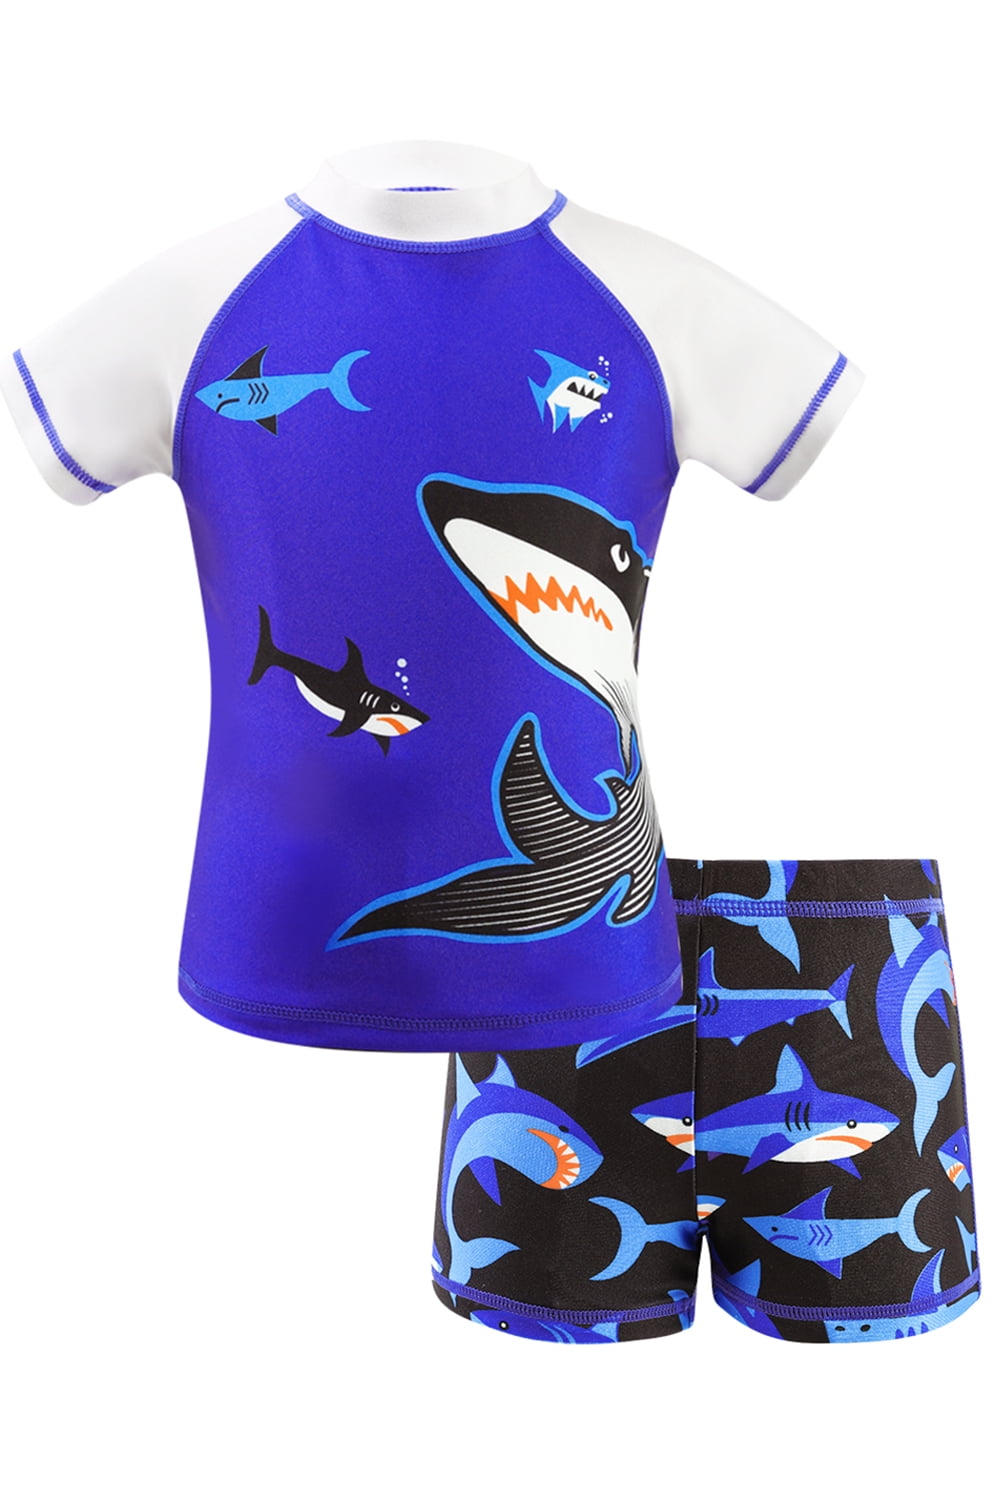 Boys Swim Suit Two Piece Set, Cartoon Shark Toddler Kids Beach Costume ...